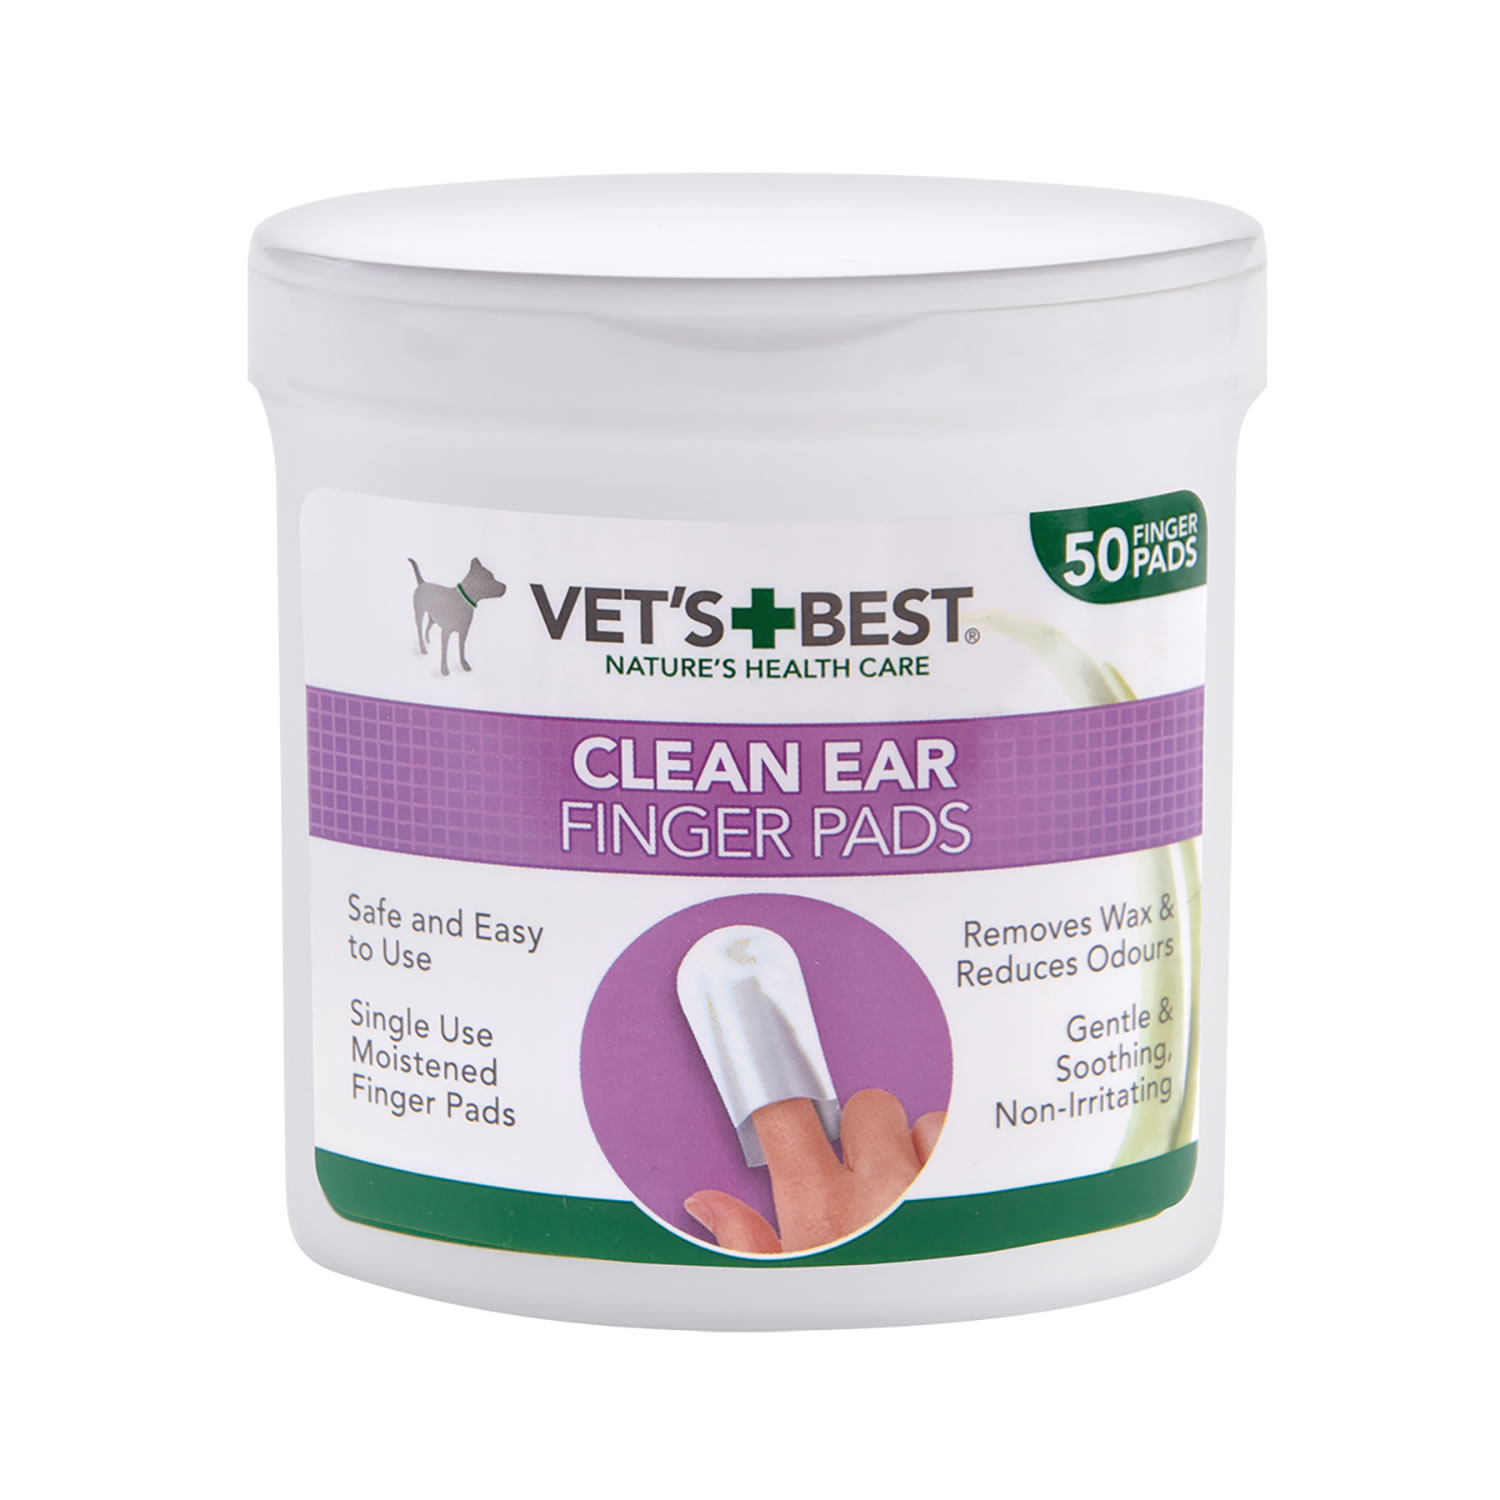 VETS BEST CLEAN EAR FINGER PADS 50 PADS 50 PADS